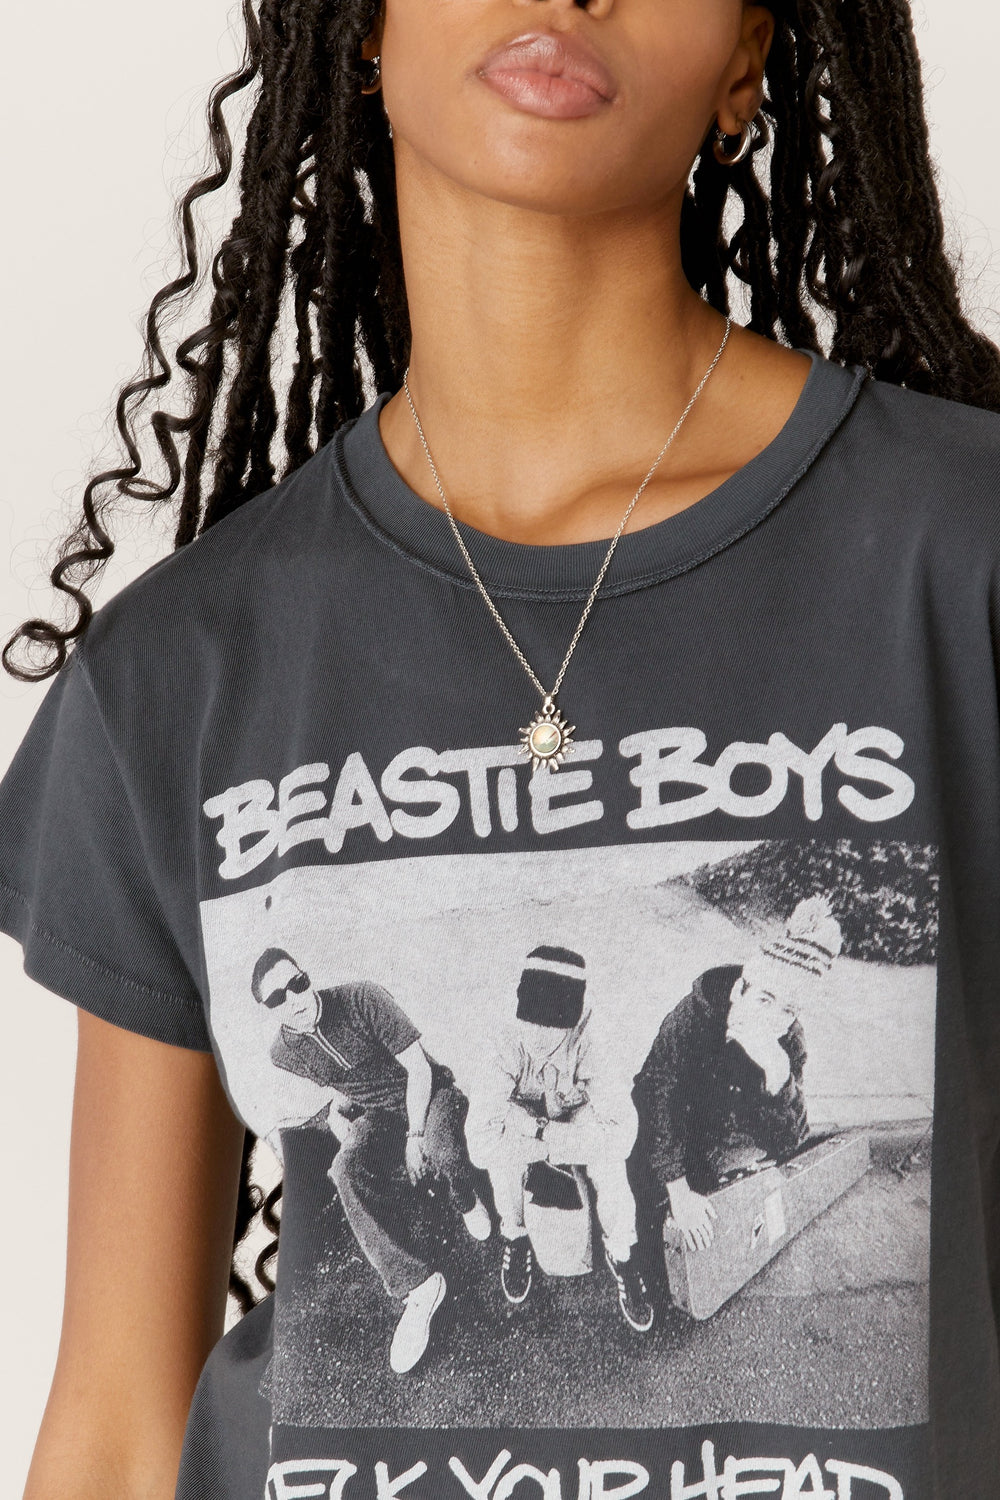 Beastie Boys Check Your Head Girlfriend Tee